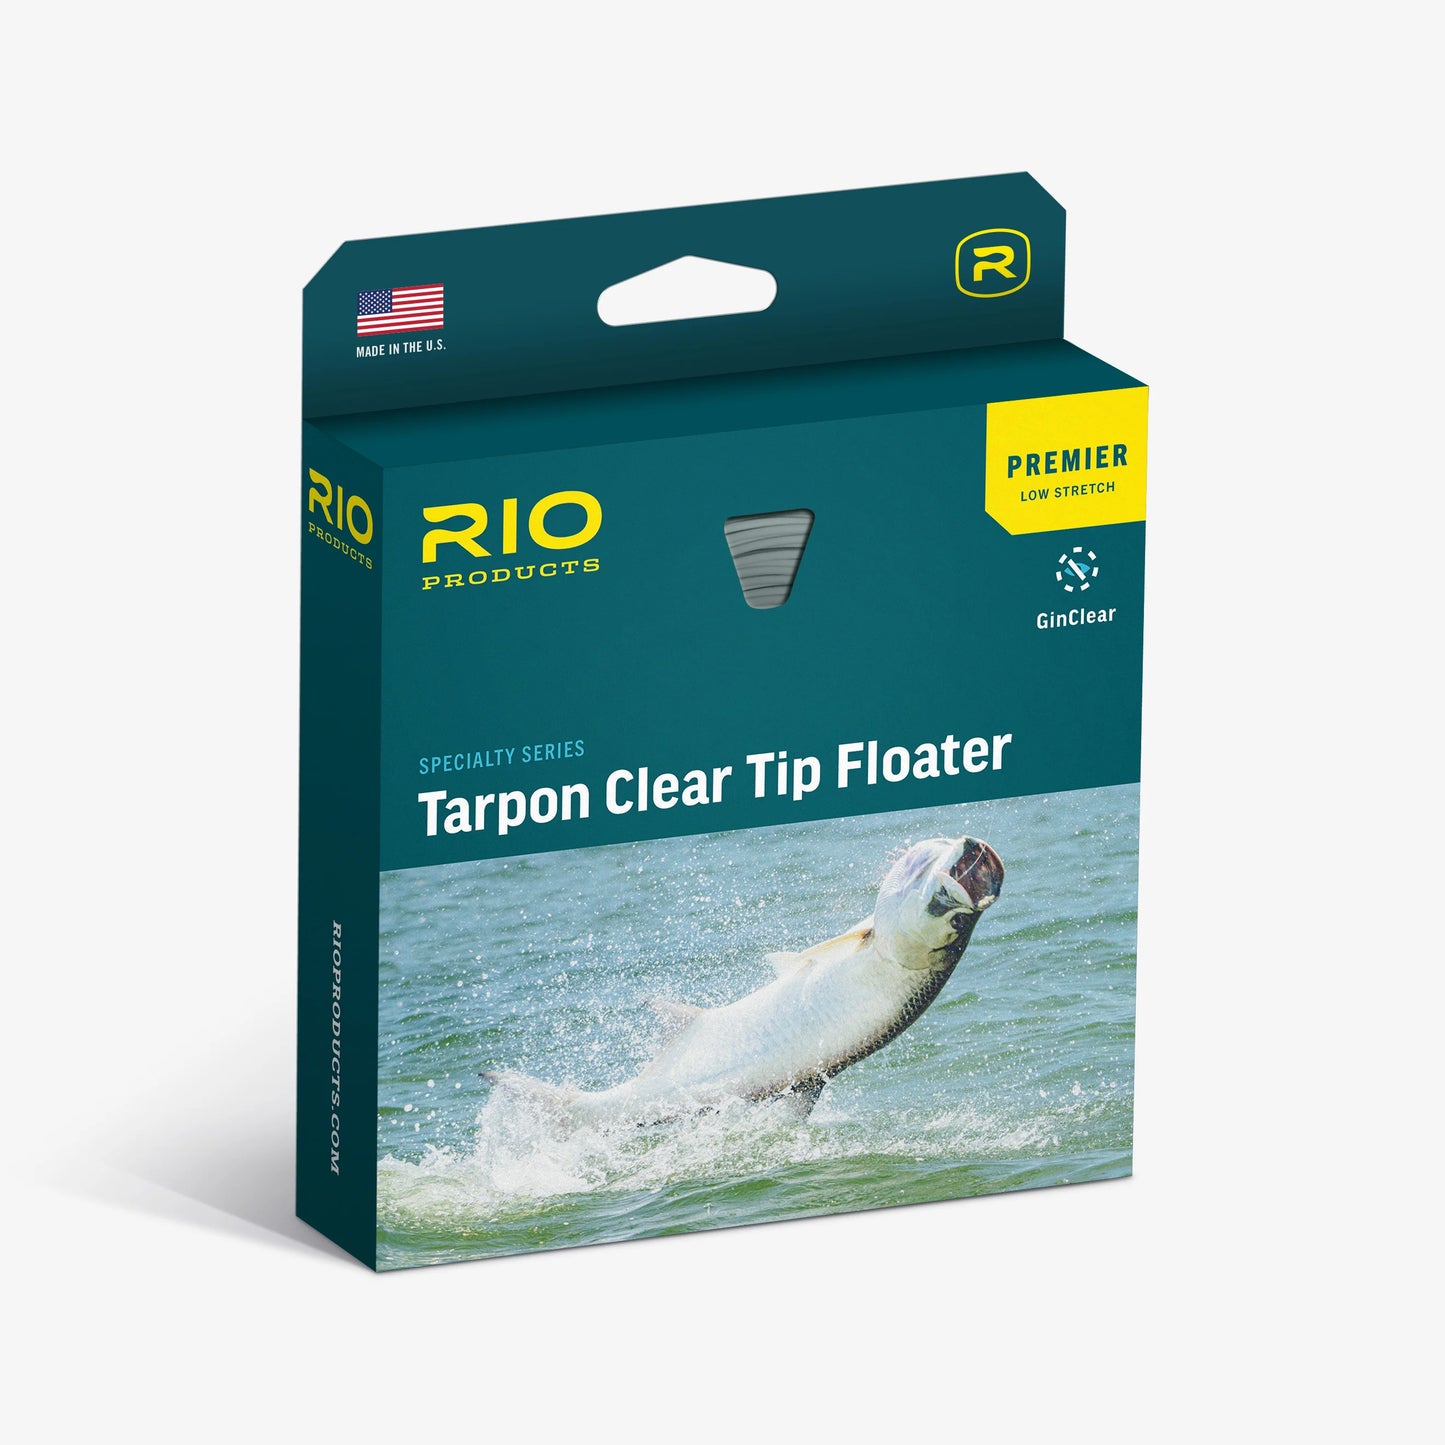 Premier Tarpon Clear Tip Floater